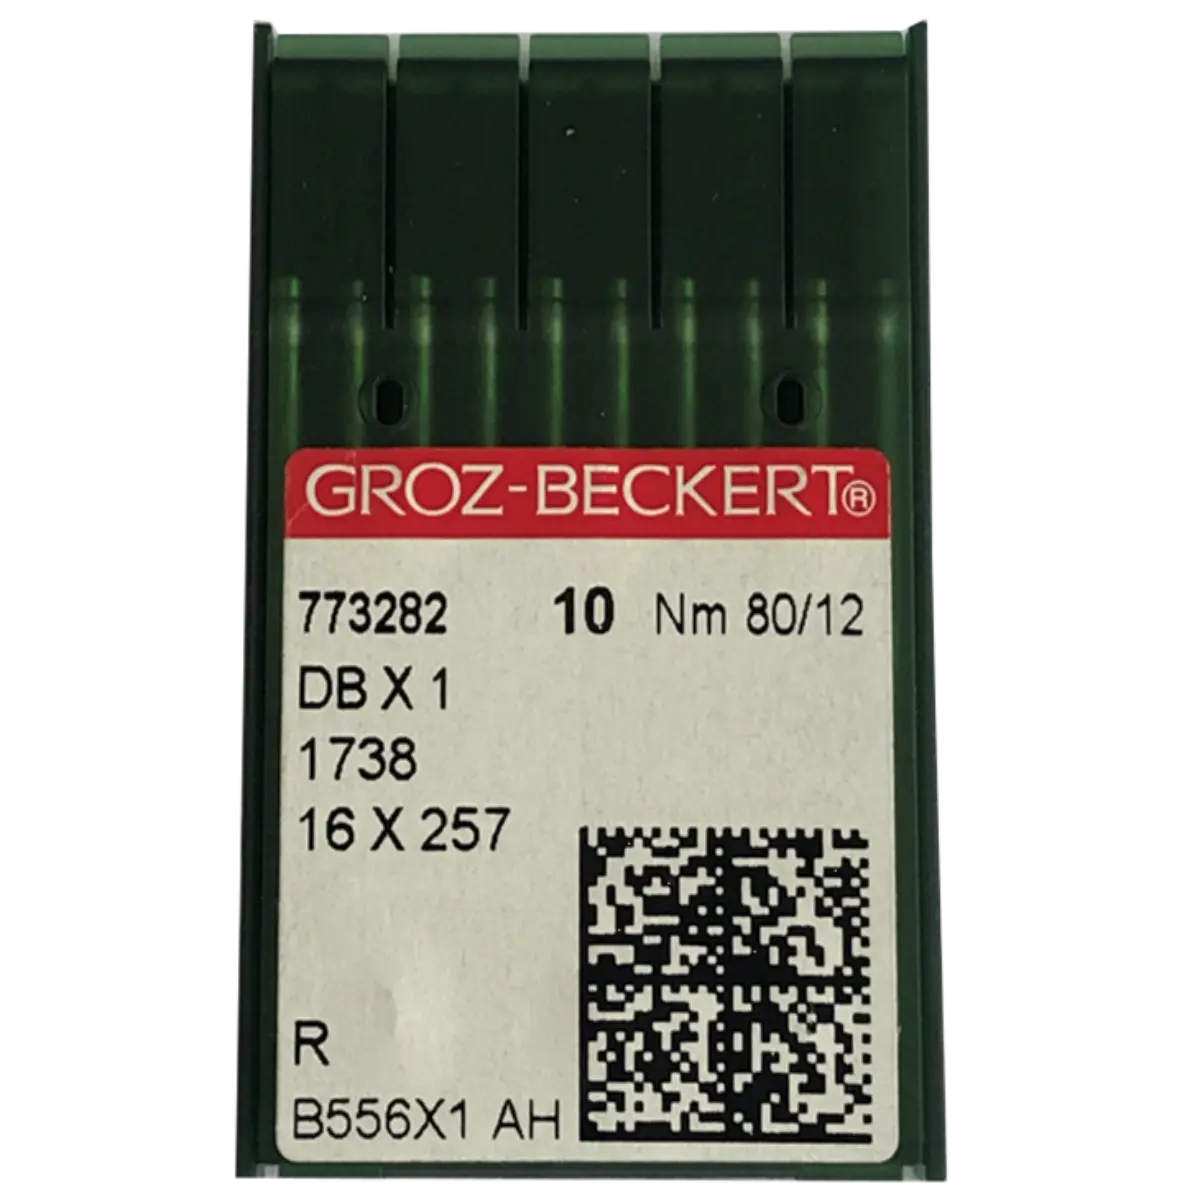 Quality Groz-Beckert industrial sewing needles 1738A, 16x231, DBx1, 16x257 Size 80